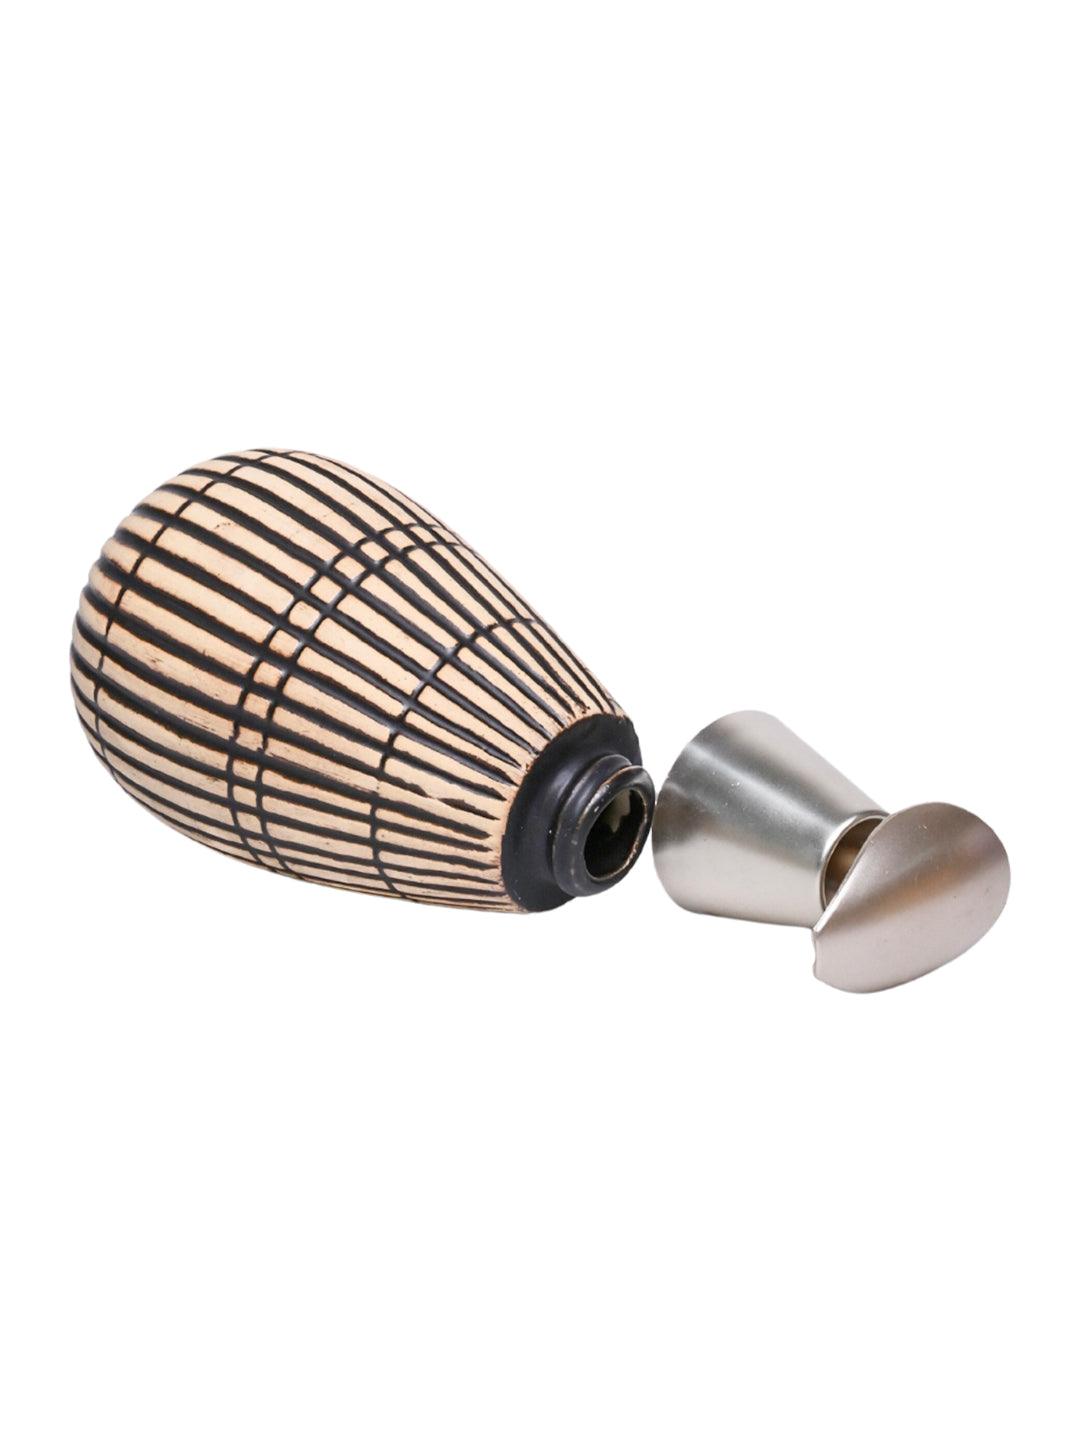 Brown Ceramic Pear Shape Soap Dispenser - Ribbed Pattern, Bath Accessories - MARKET 99